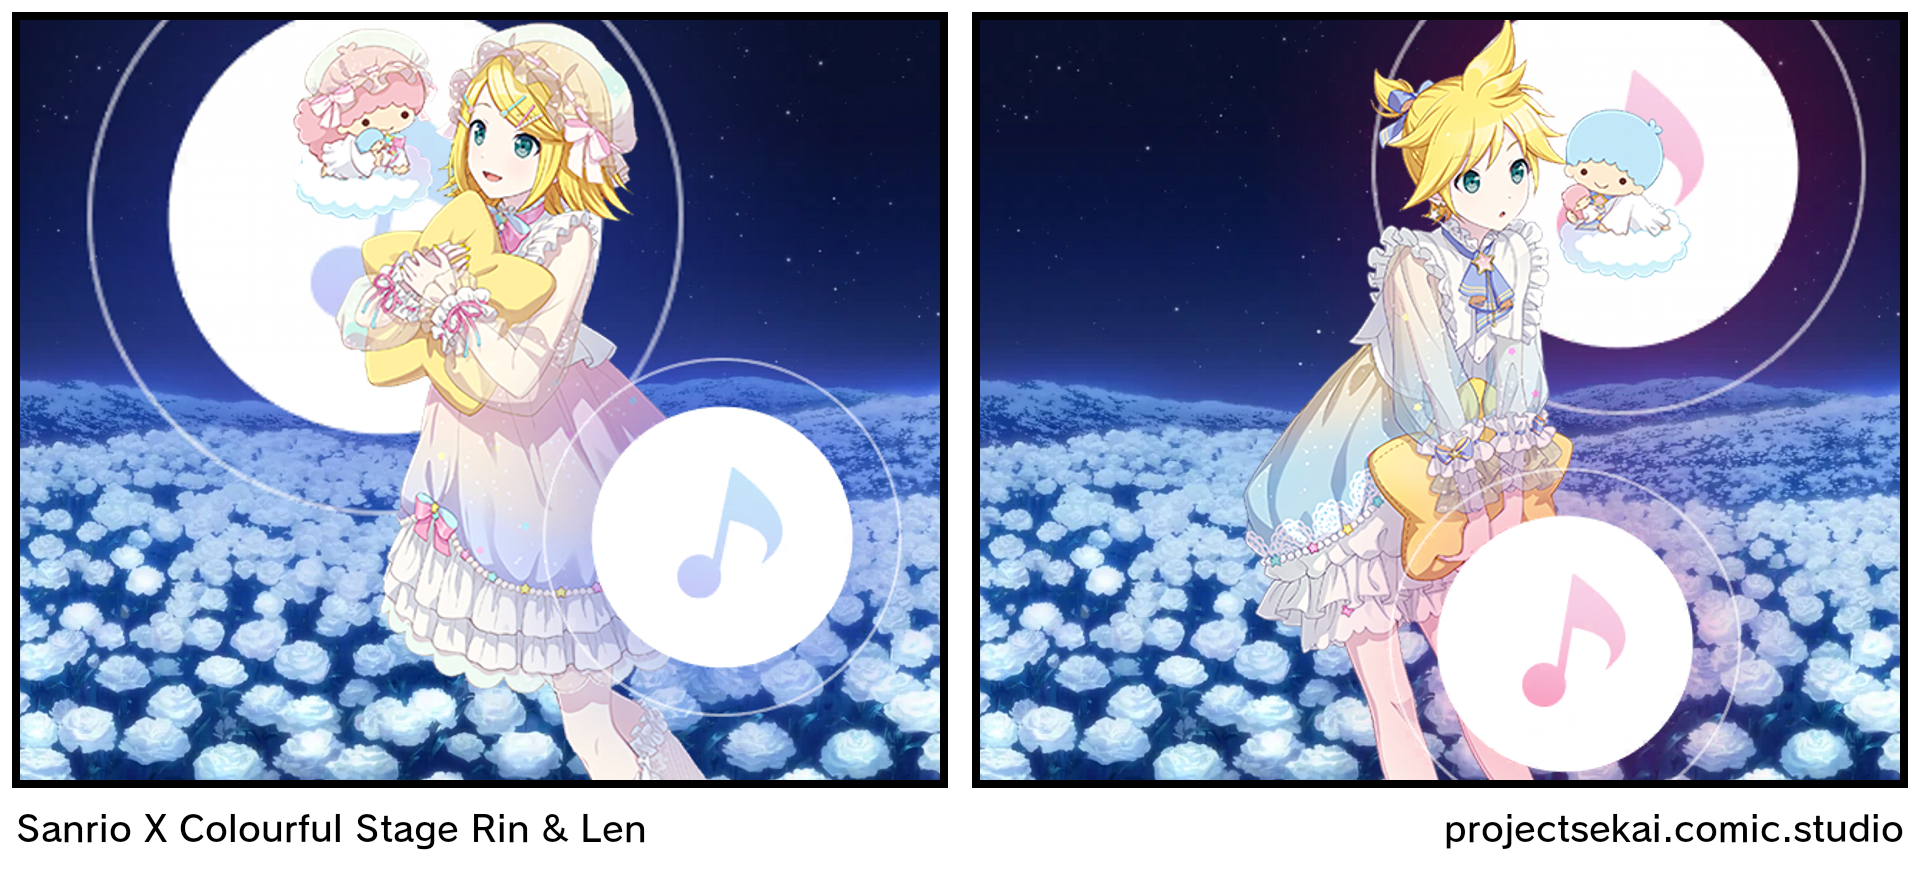 Sanrio X Colourful Stage Rin & Len